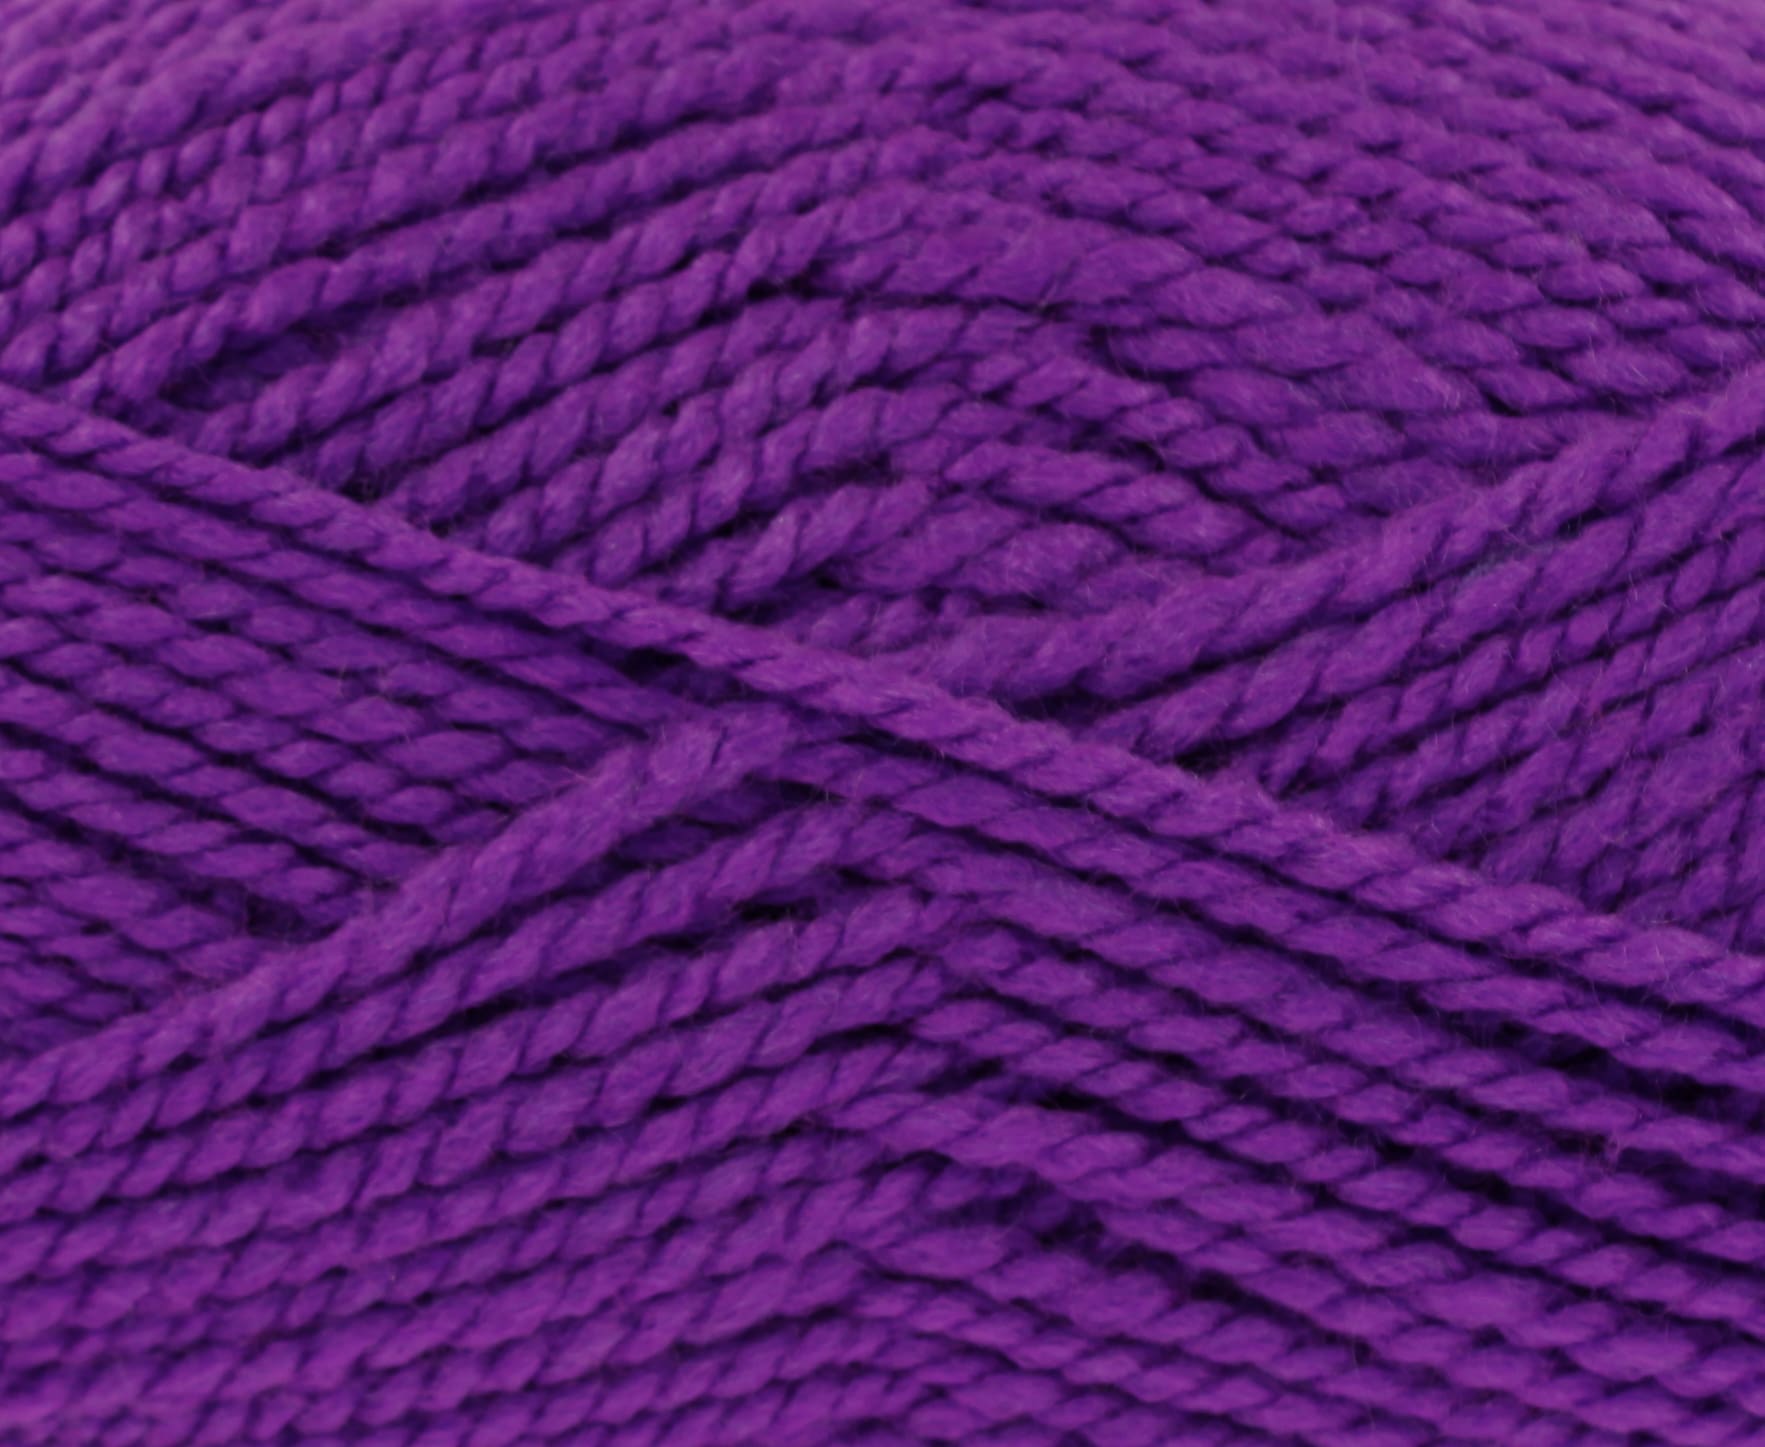 Chunky Yarn: Purple Big Value Chunky Yarn. 100g Ball of King Cole Big Value Chunky  Yarn in Purple 